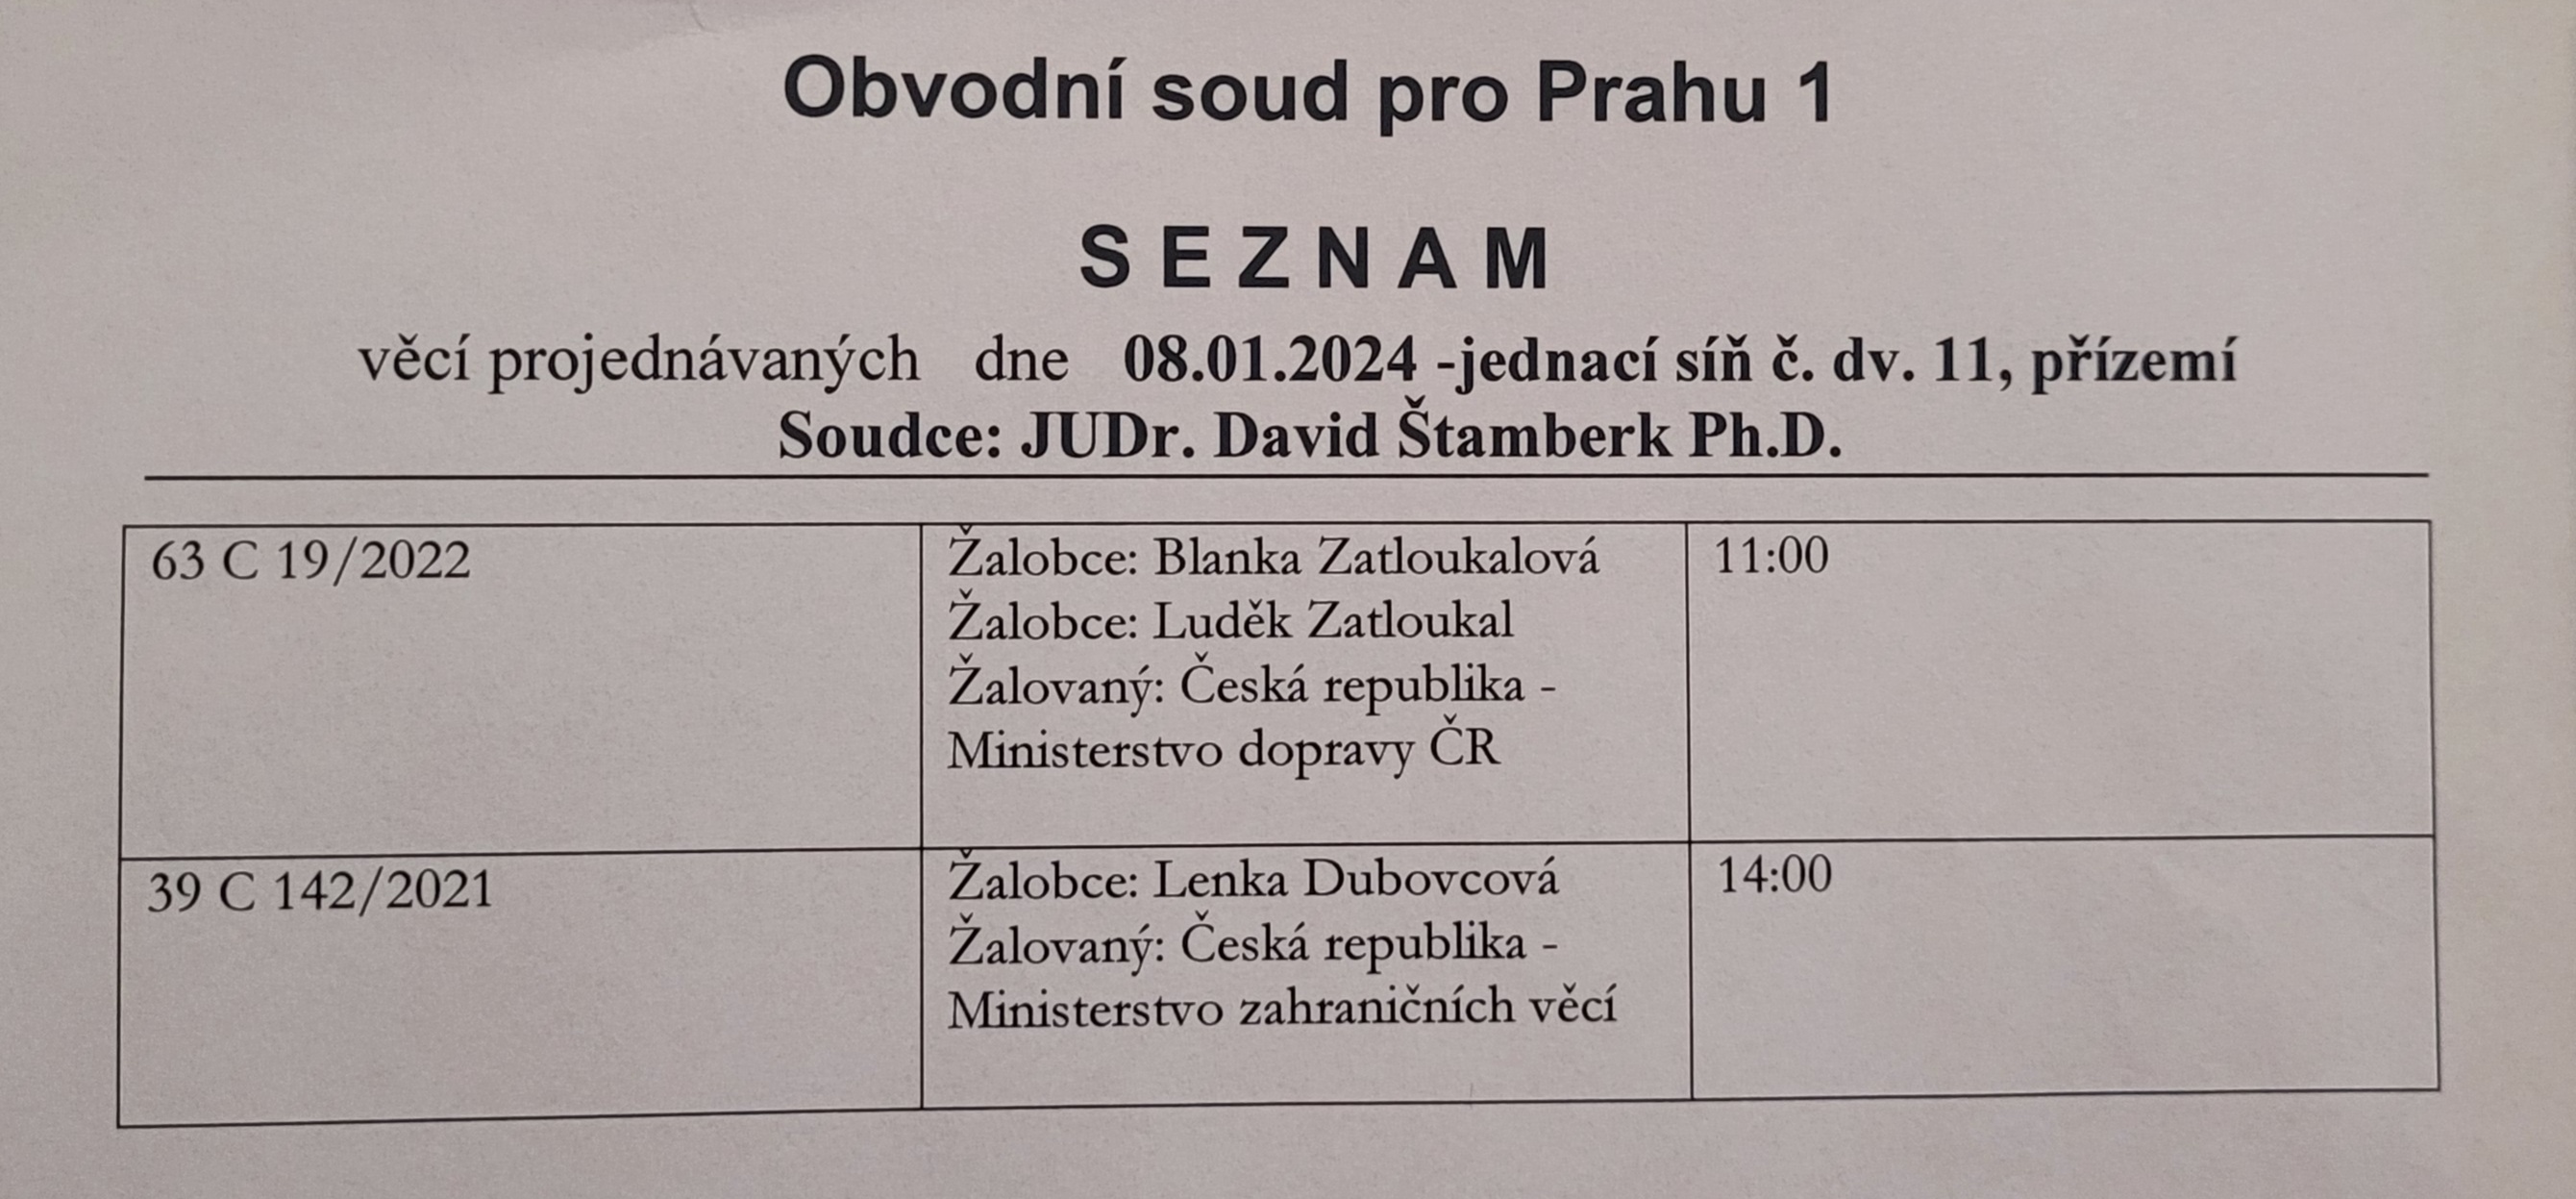 OS Praha 1 prg Dubovcova 8.1.2024